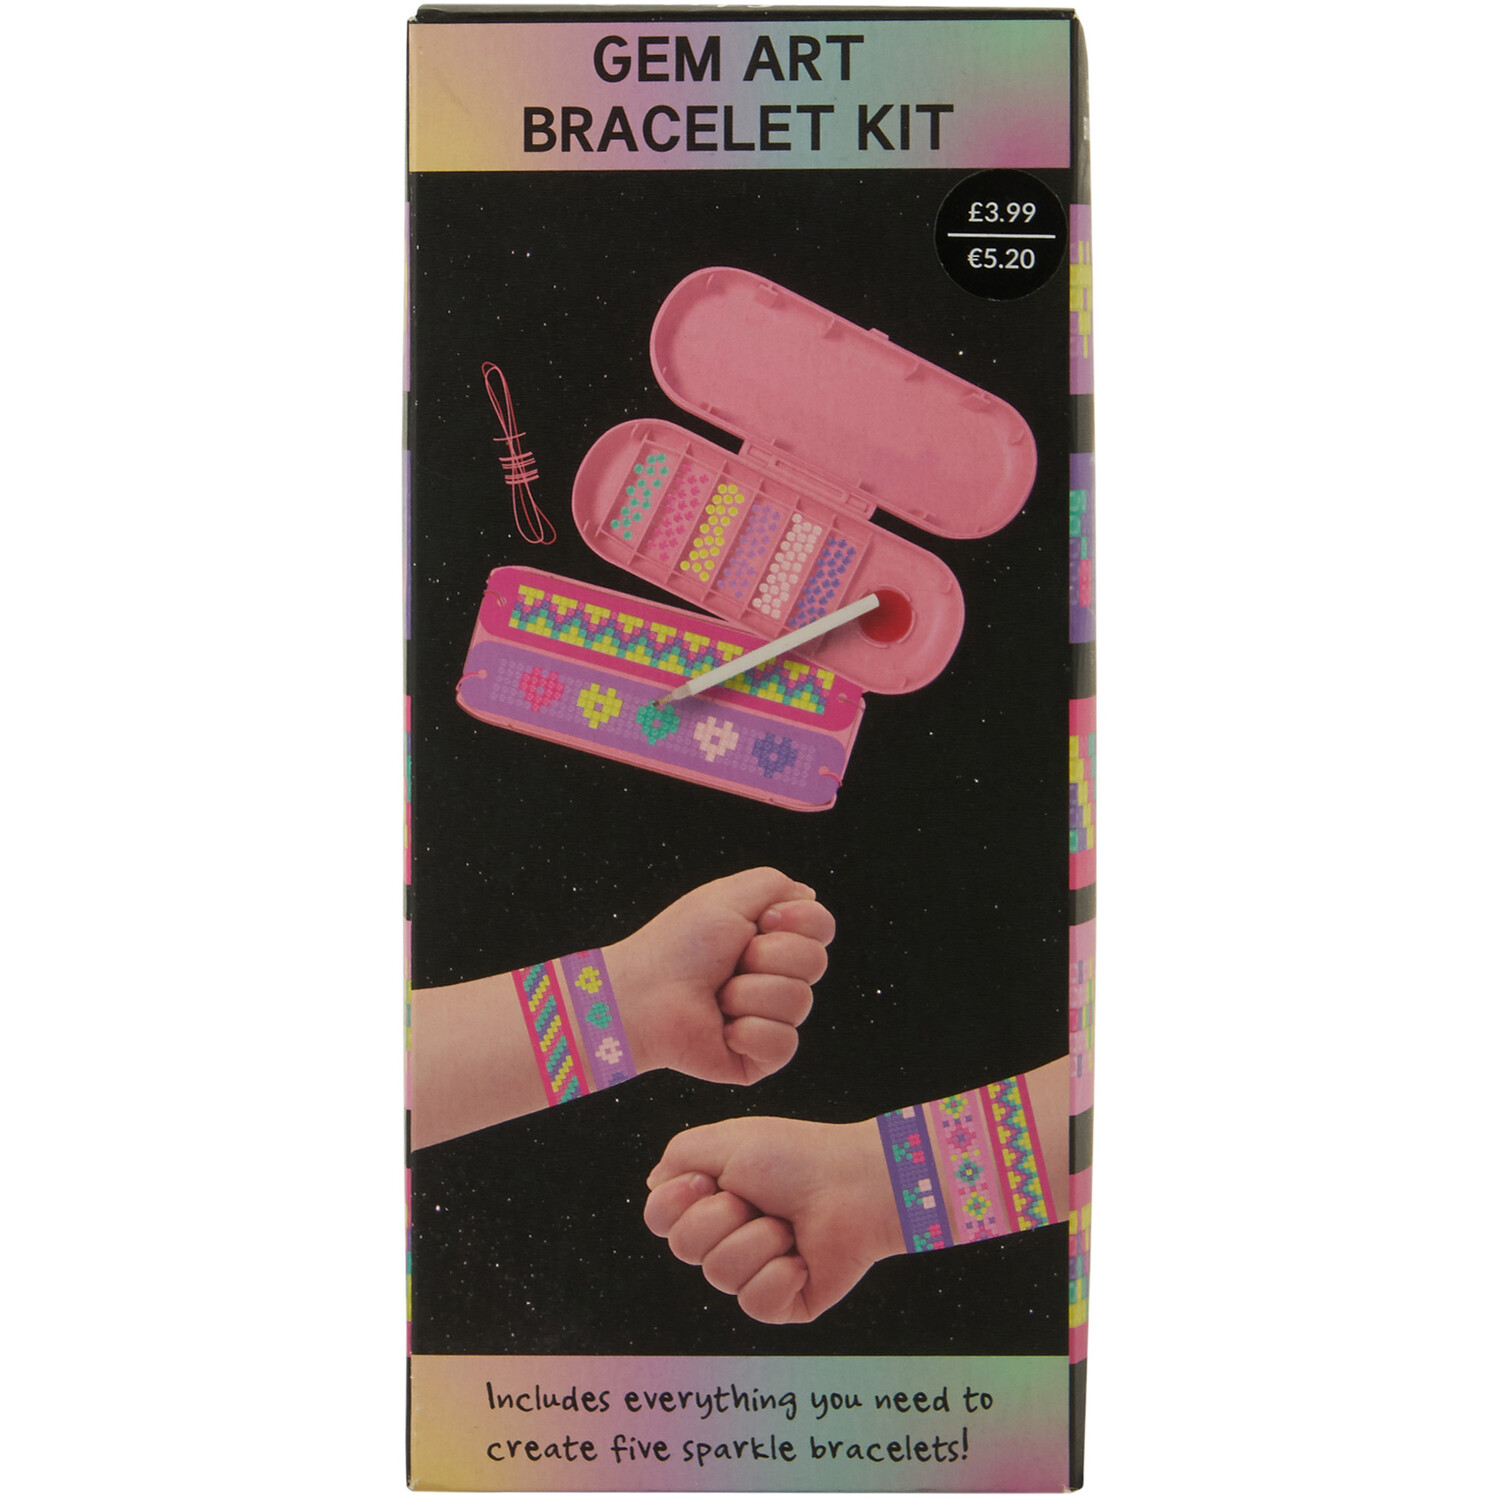 Gem Art Bracelet Kit Image 7